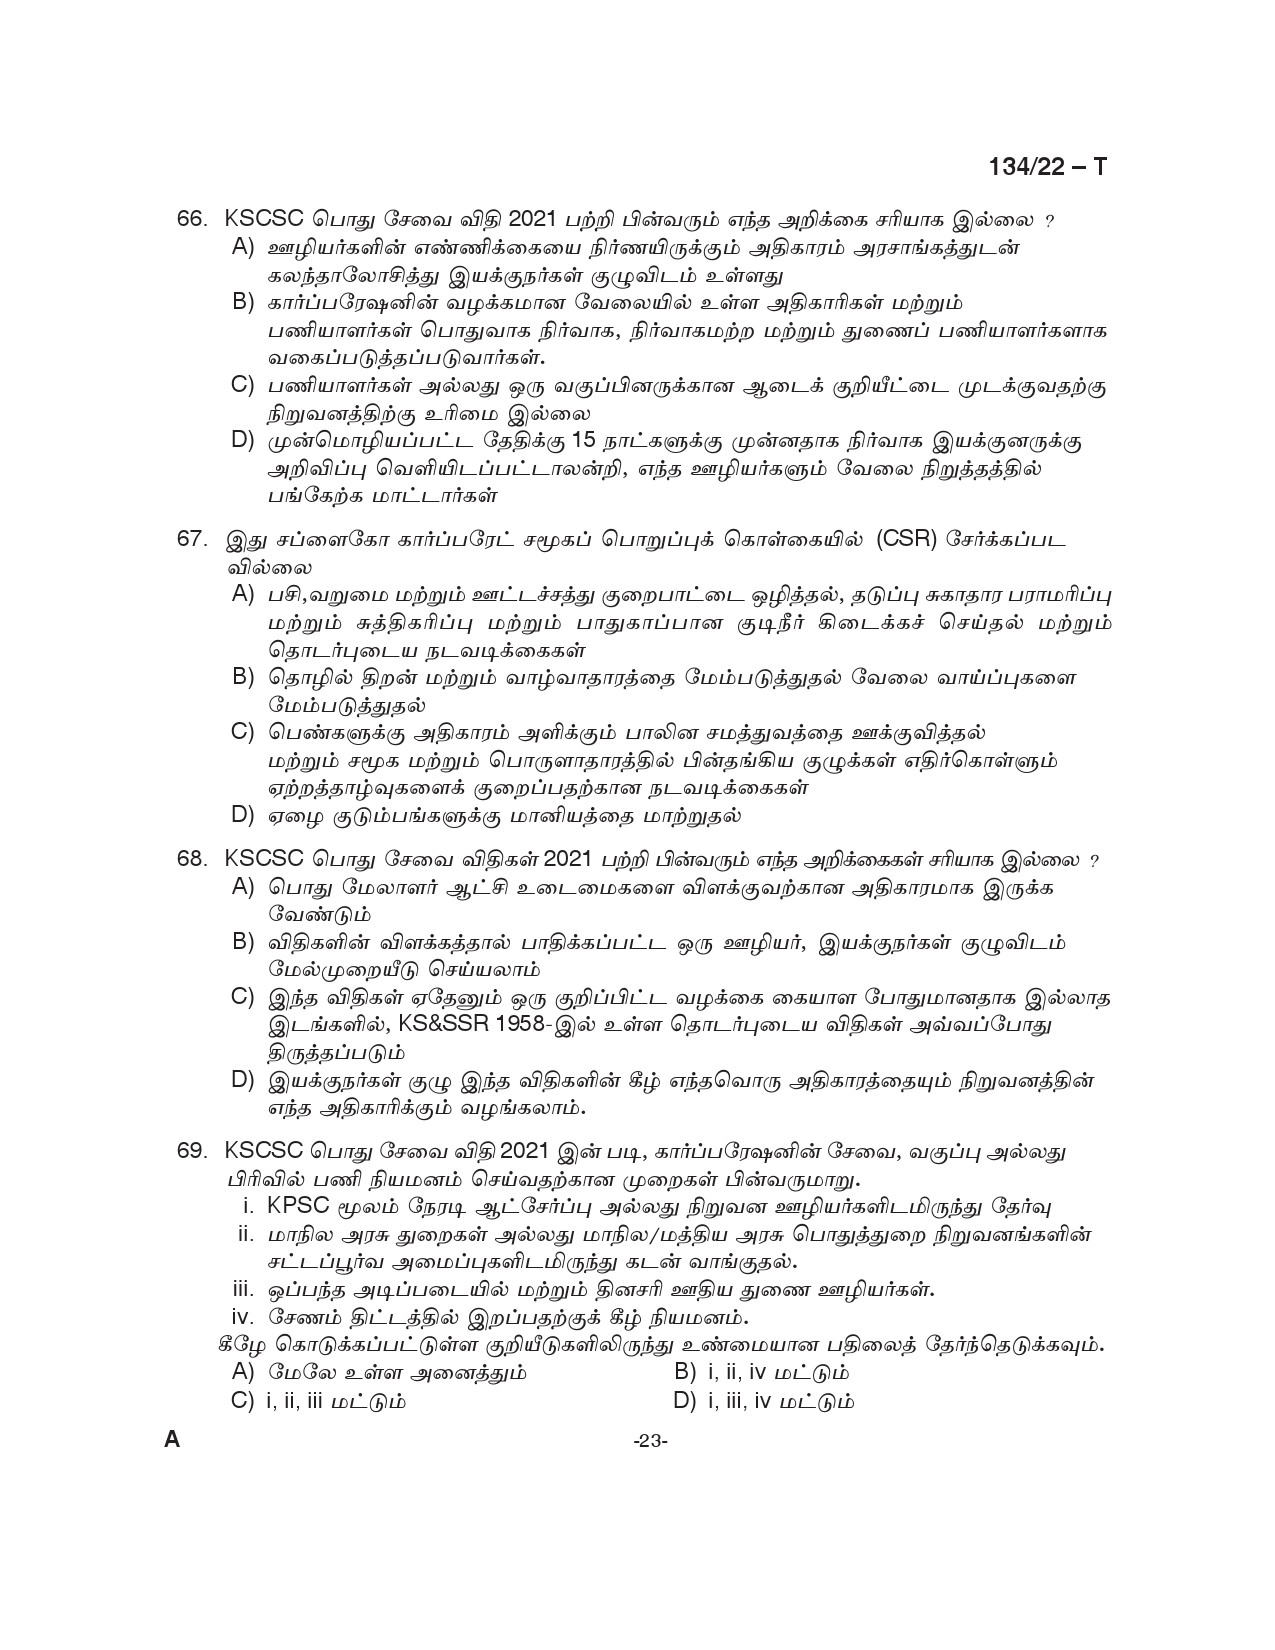 KPSC Junior Manager General Tamil Exam 2023 Code 212023OL 23